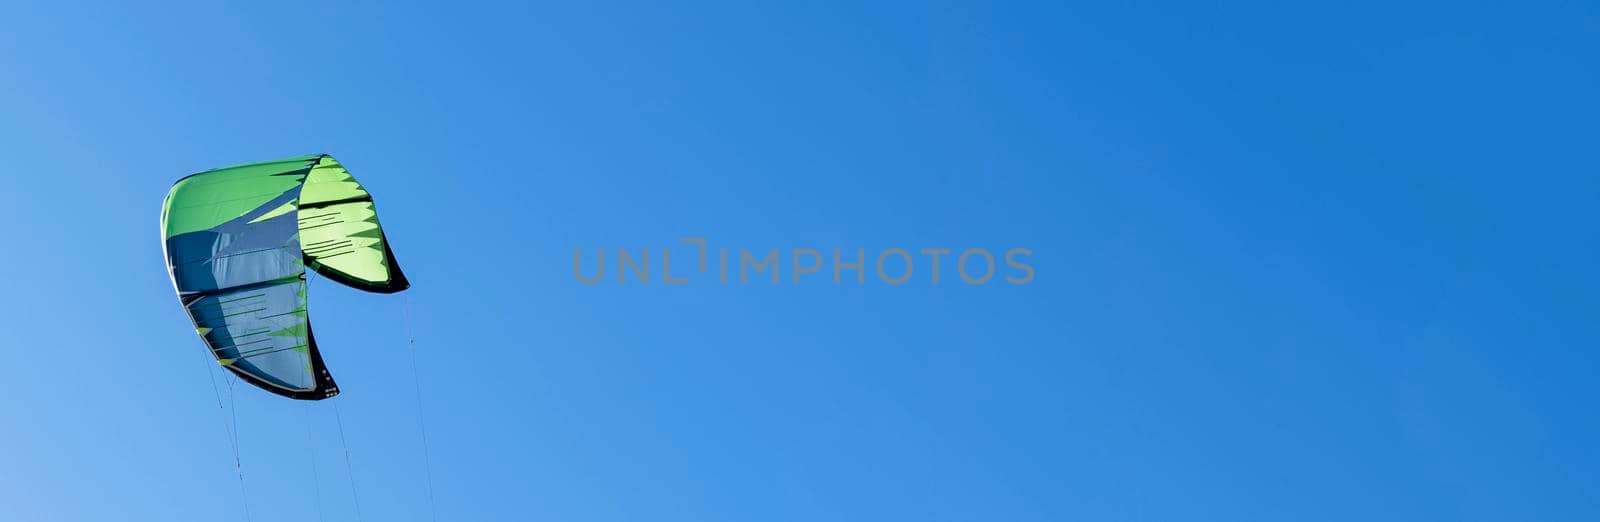 wing of kitesurfing against the blue sky . Banner by audiznam2609